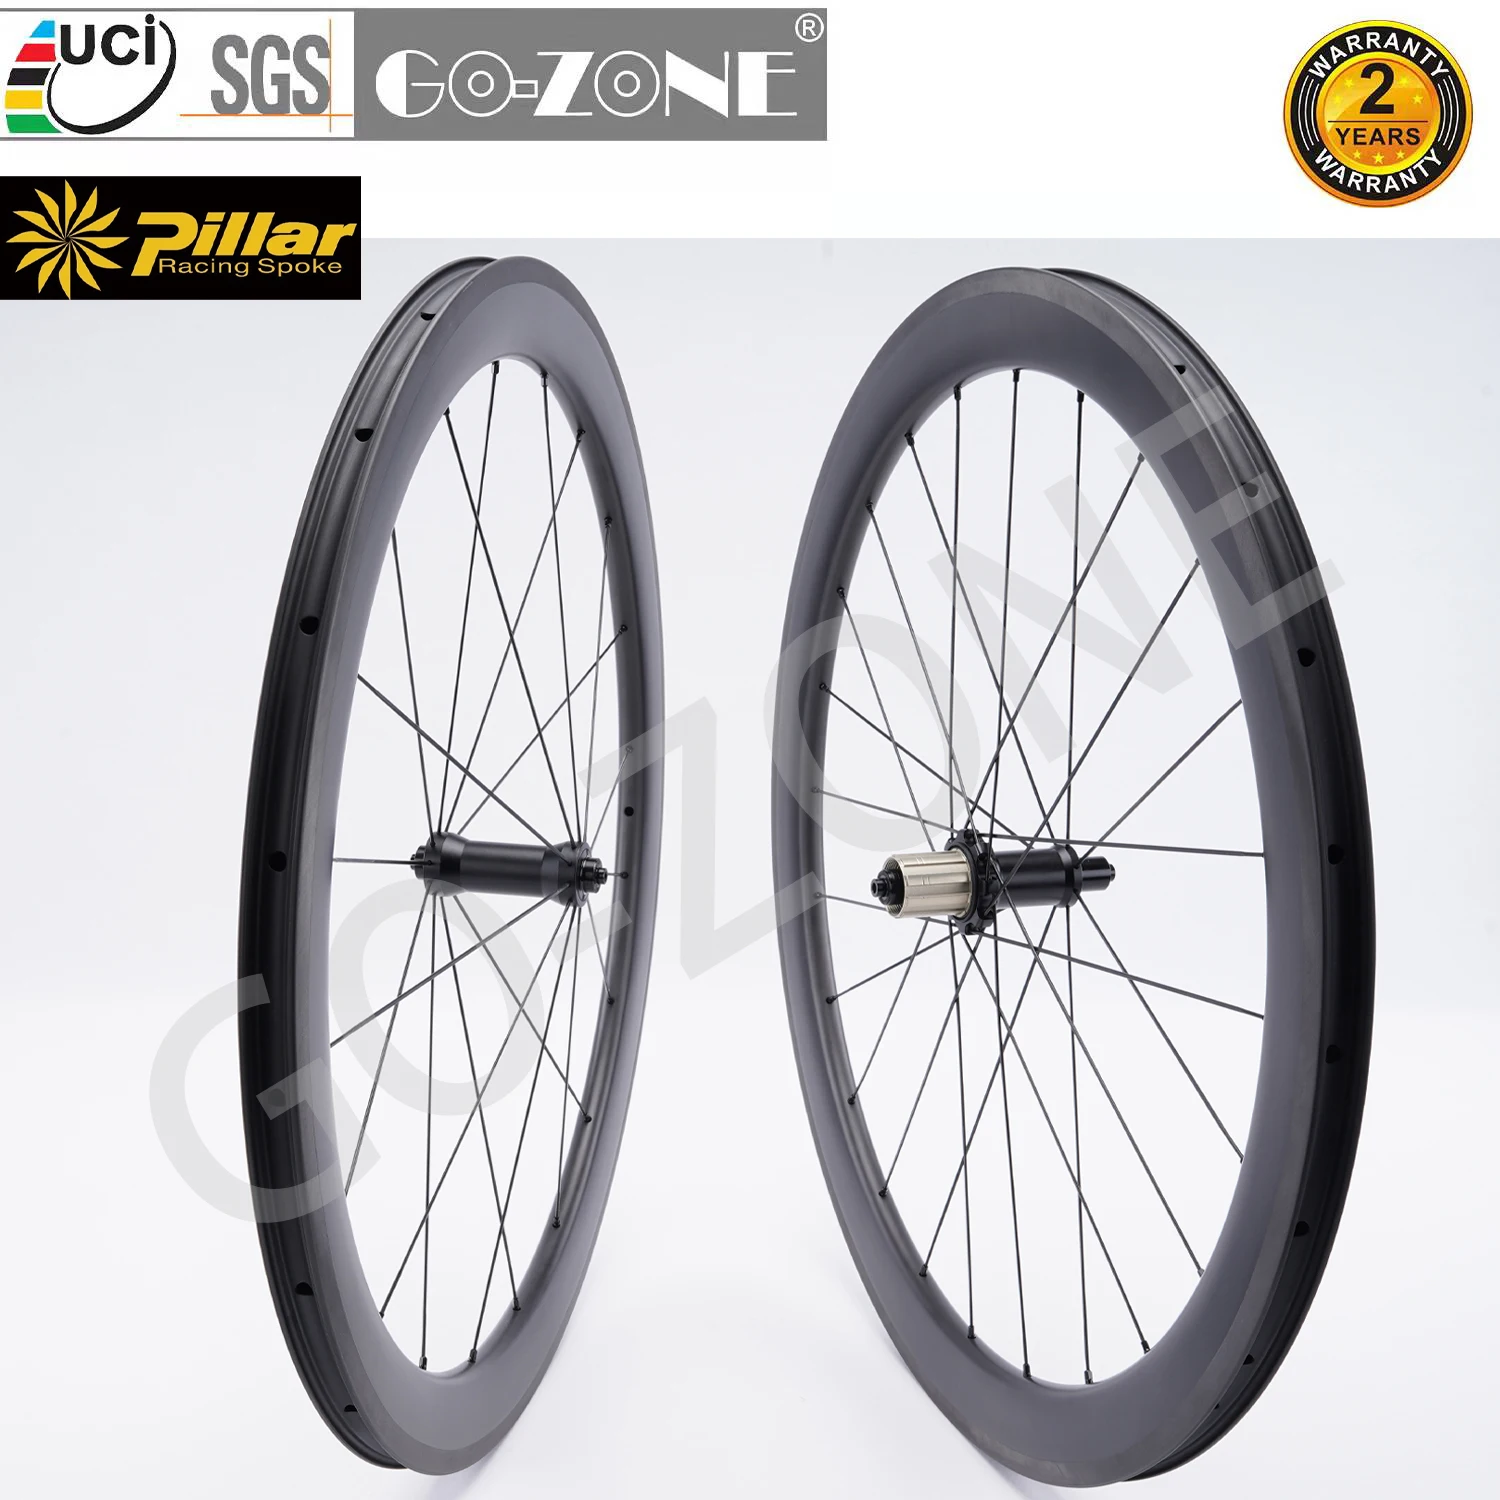 

700c Carbon Road Wheelset Rim Brake Straight Pull Gozone R290 Pillar 1423 UCI Approved Normal / Ceramic Bearings Bicycle Wheels